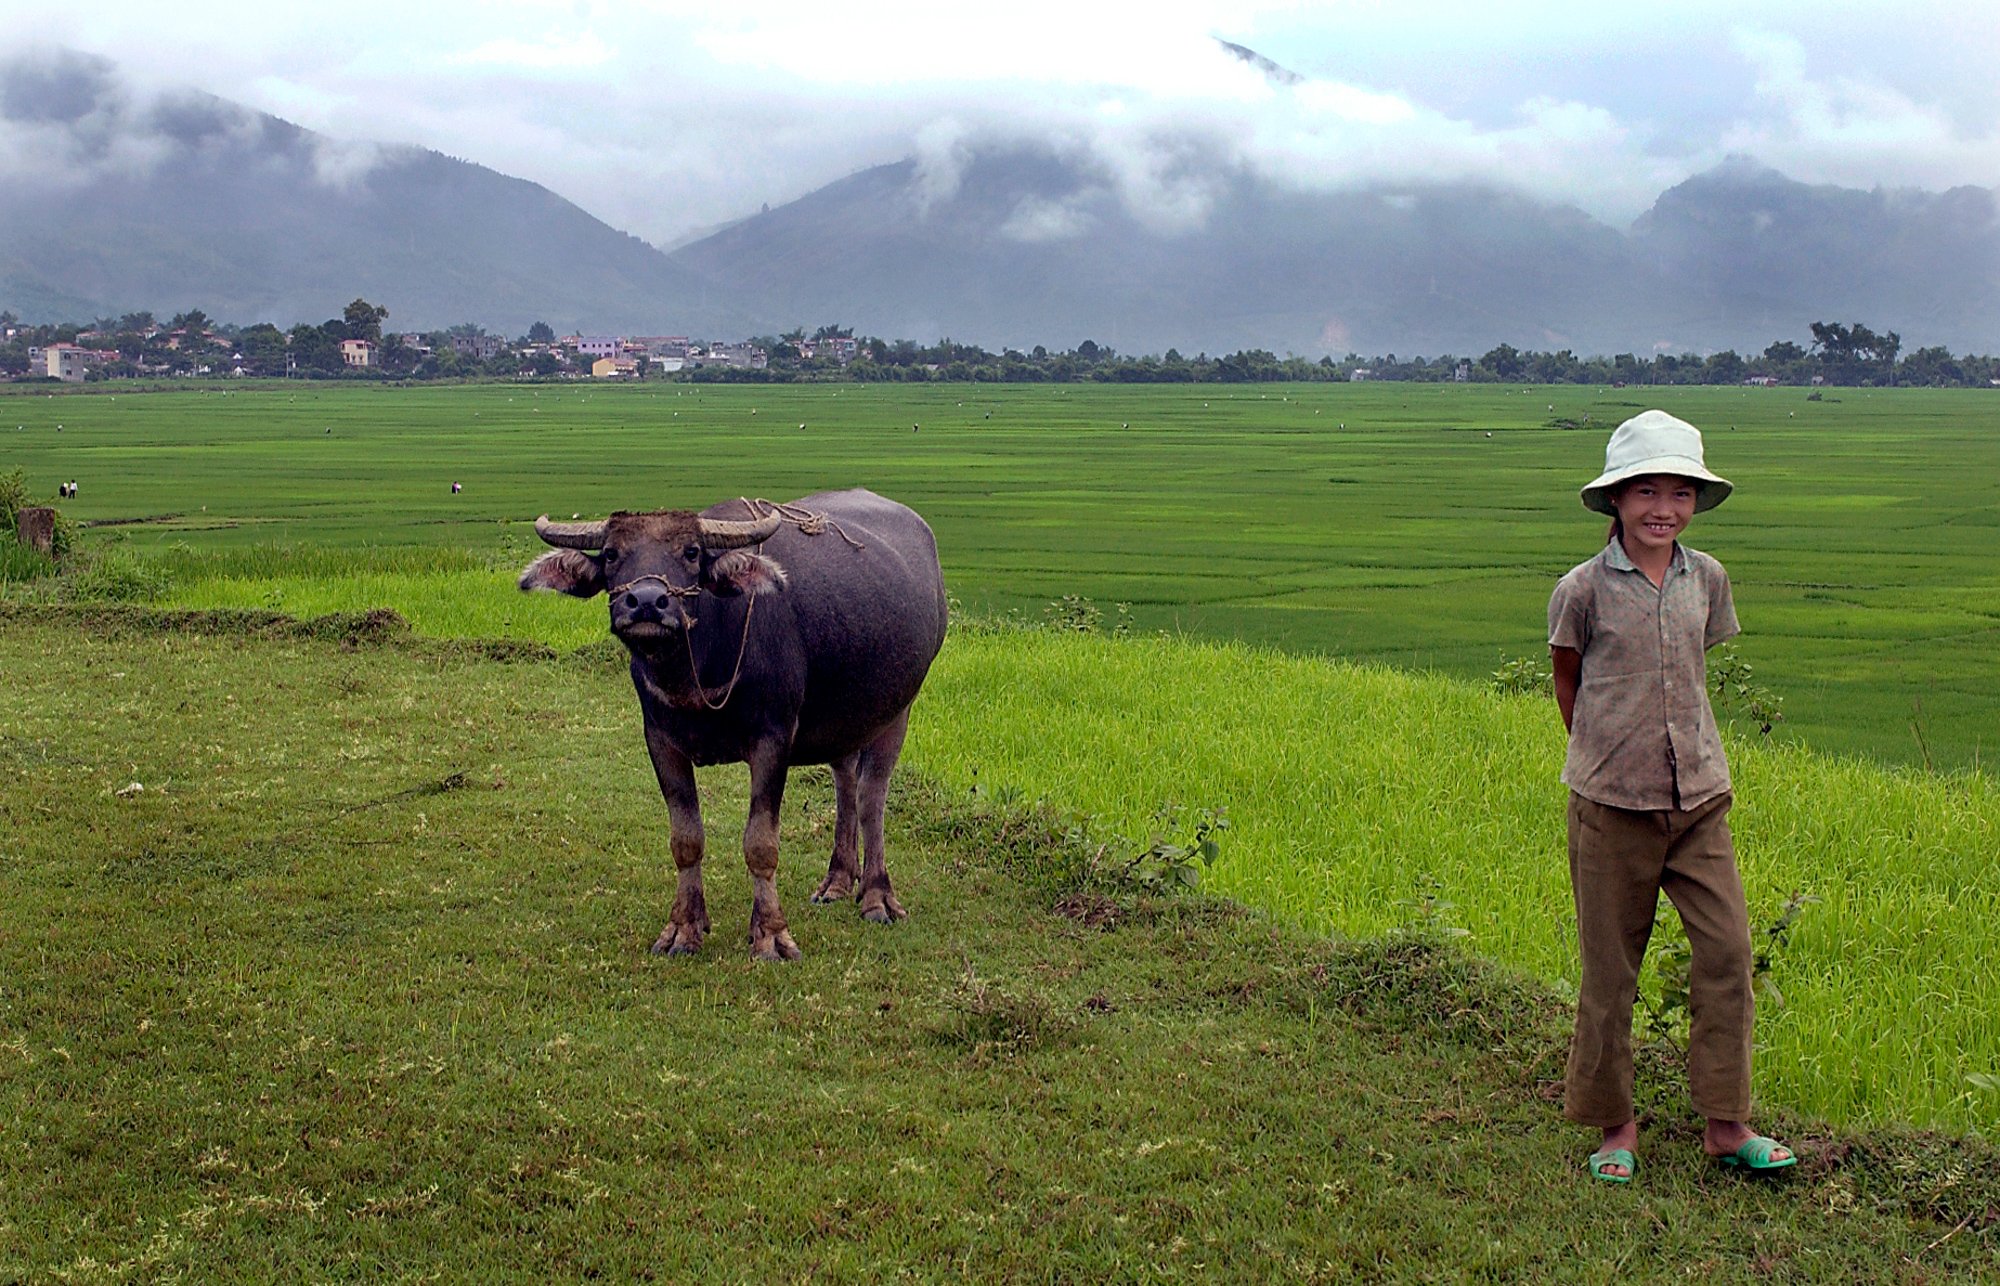 Girl and buffalo - storytelling with digital photos